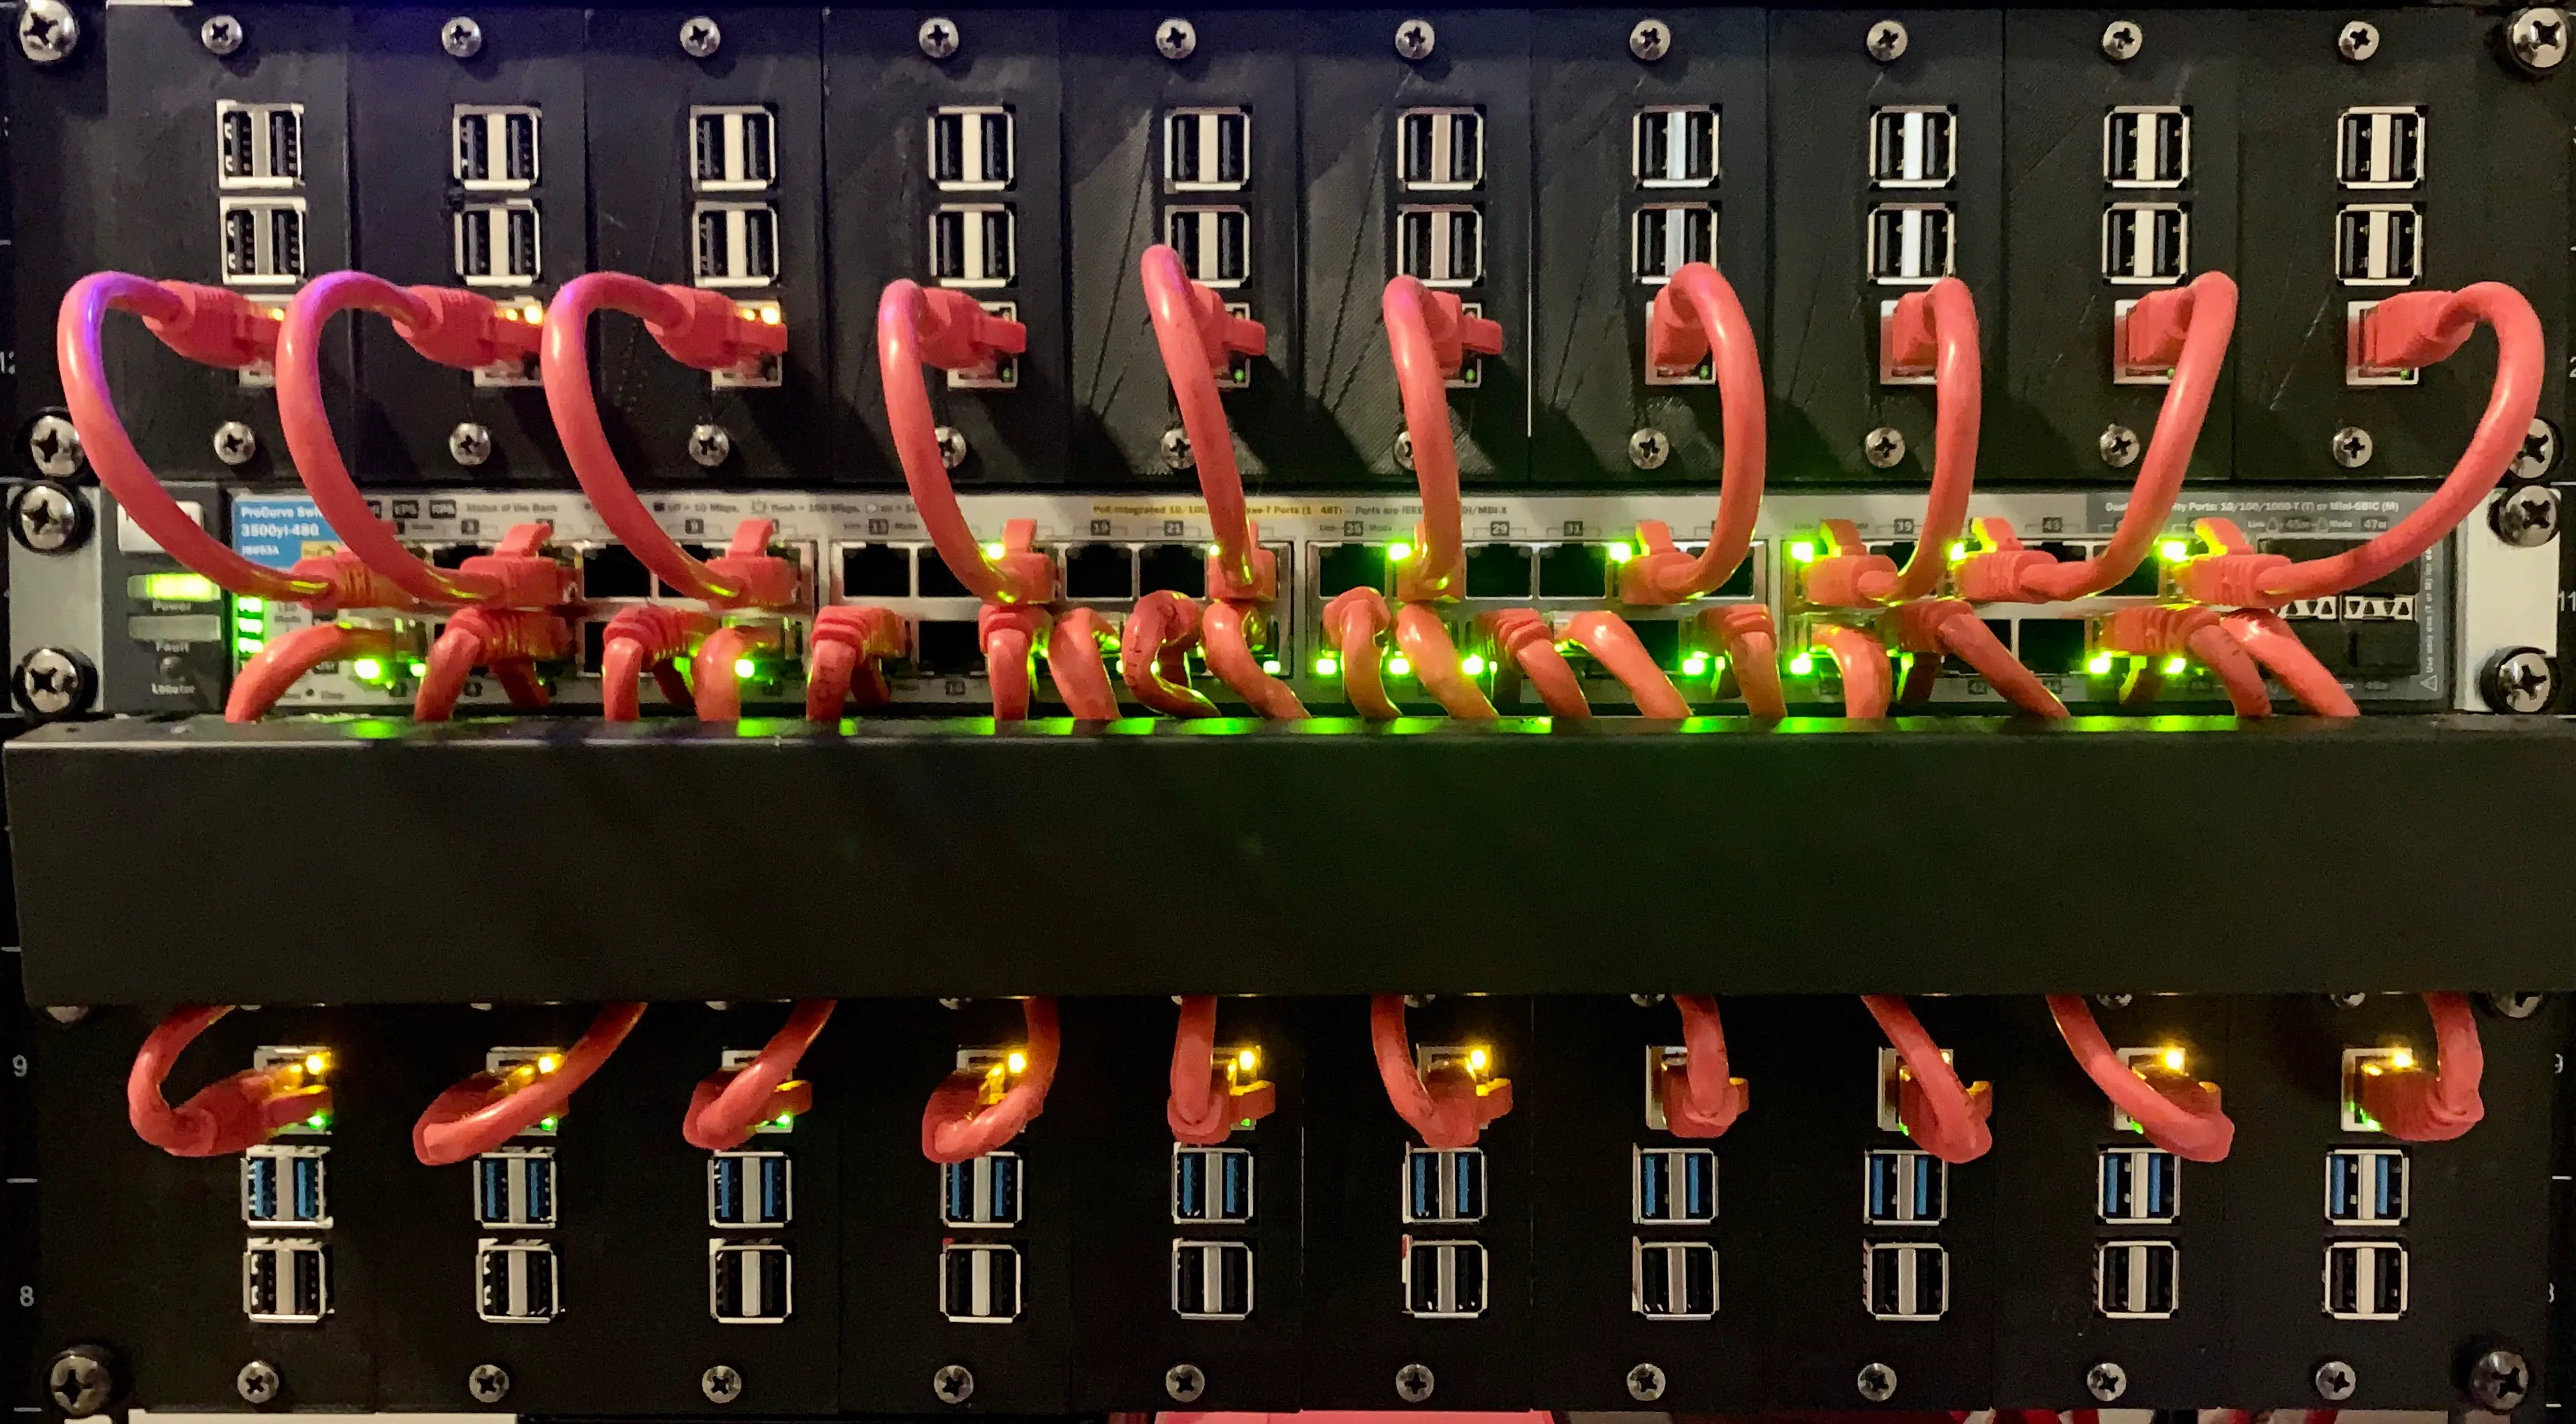 20 raspberry pis in server rack